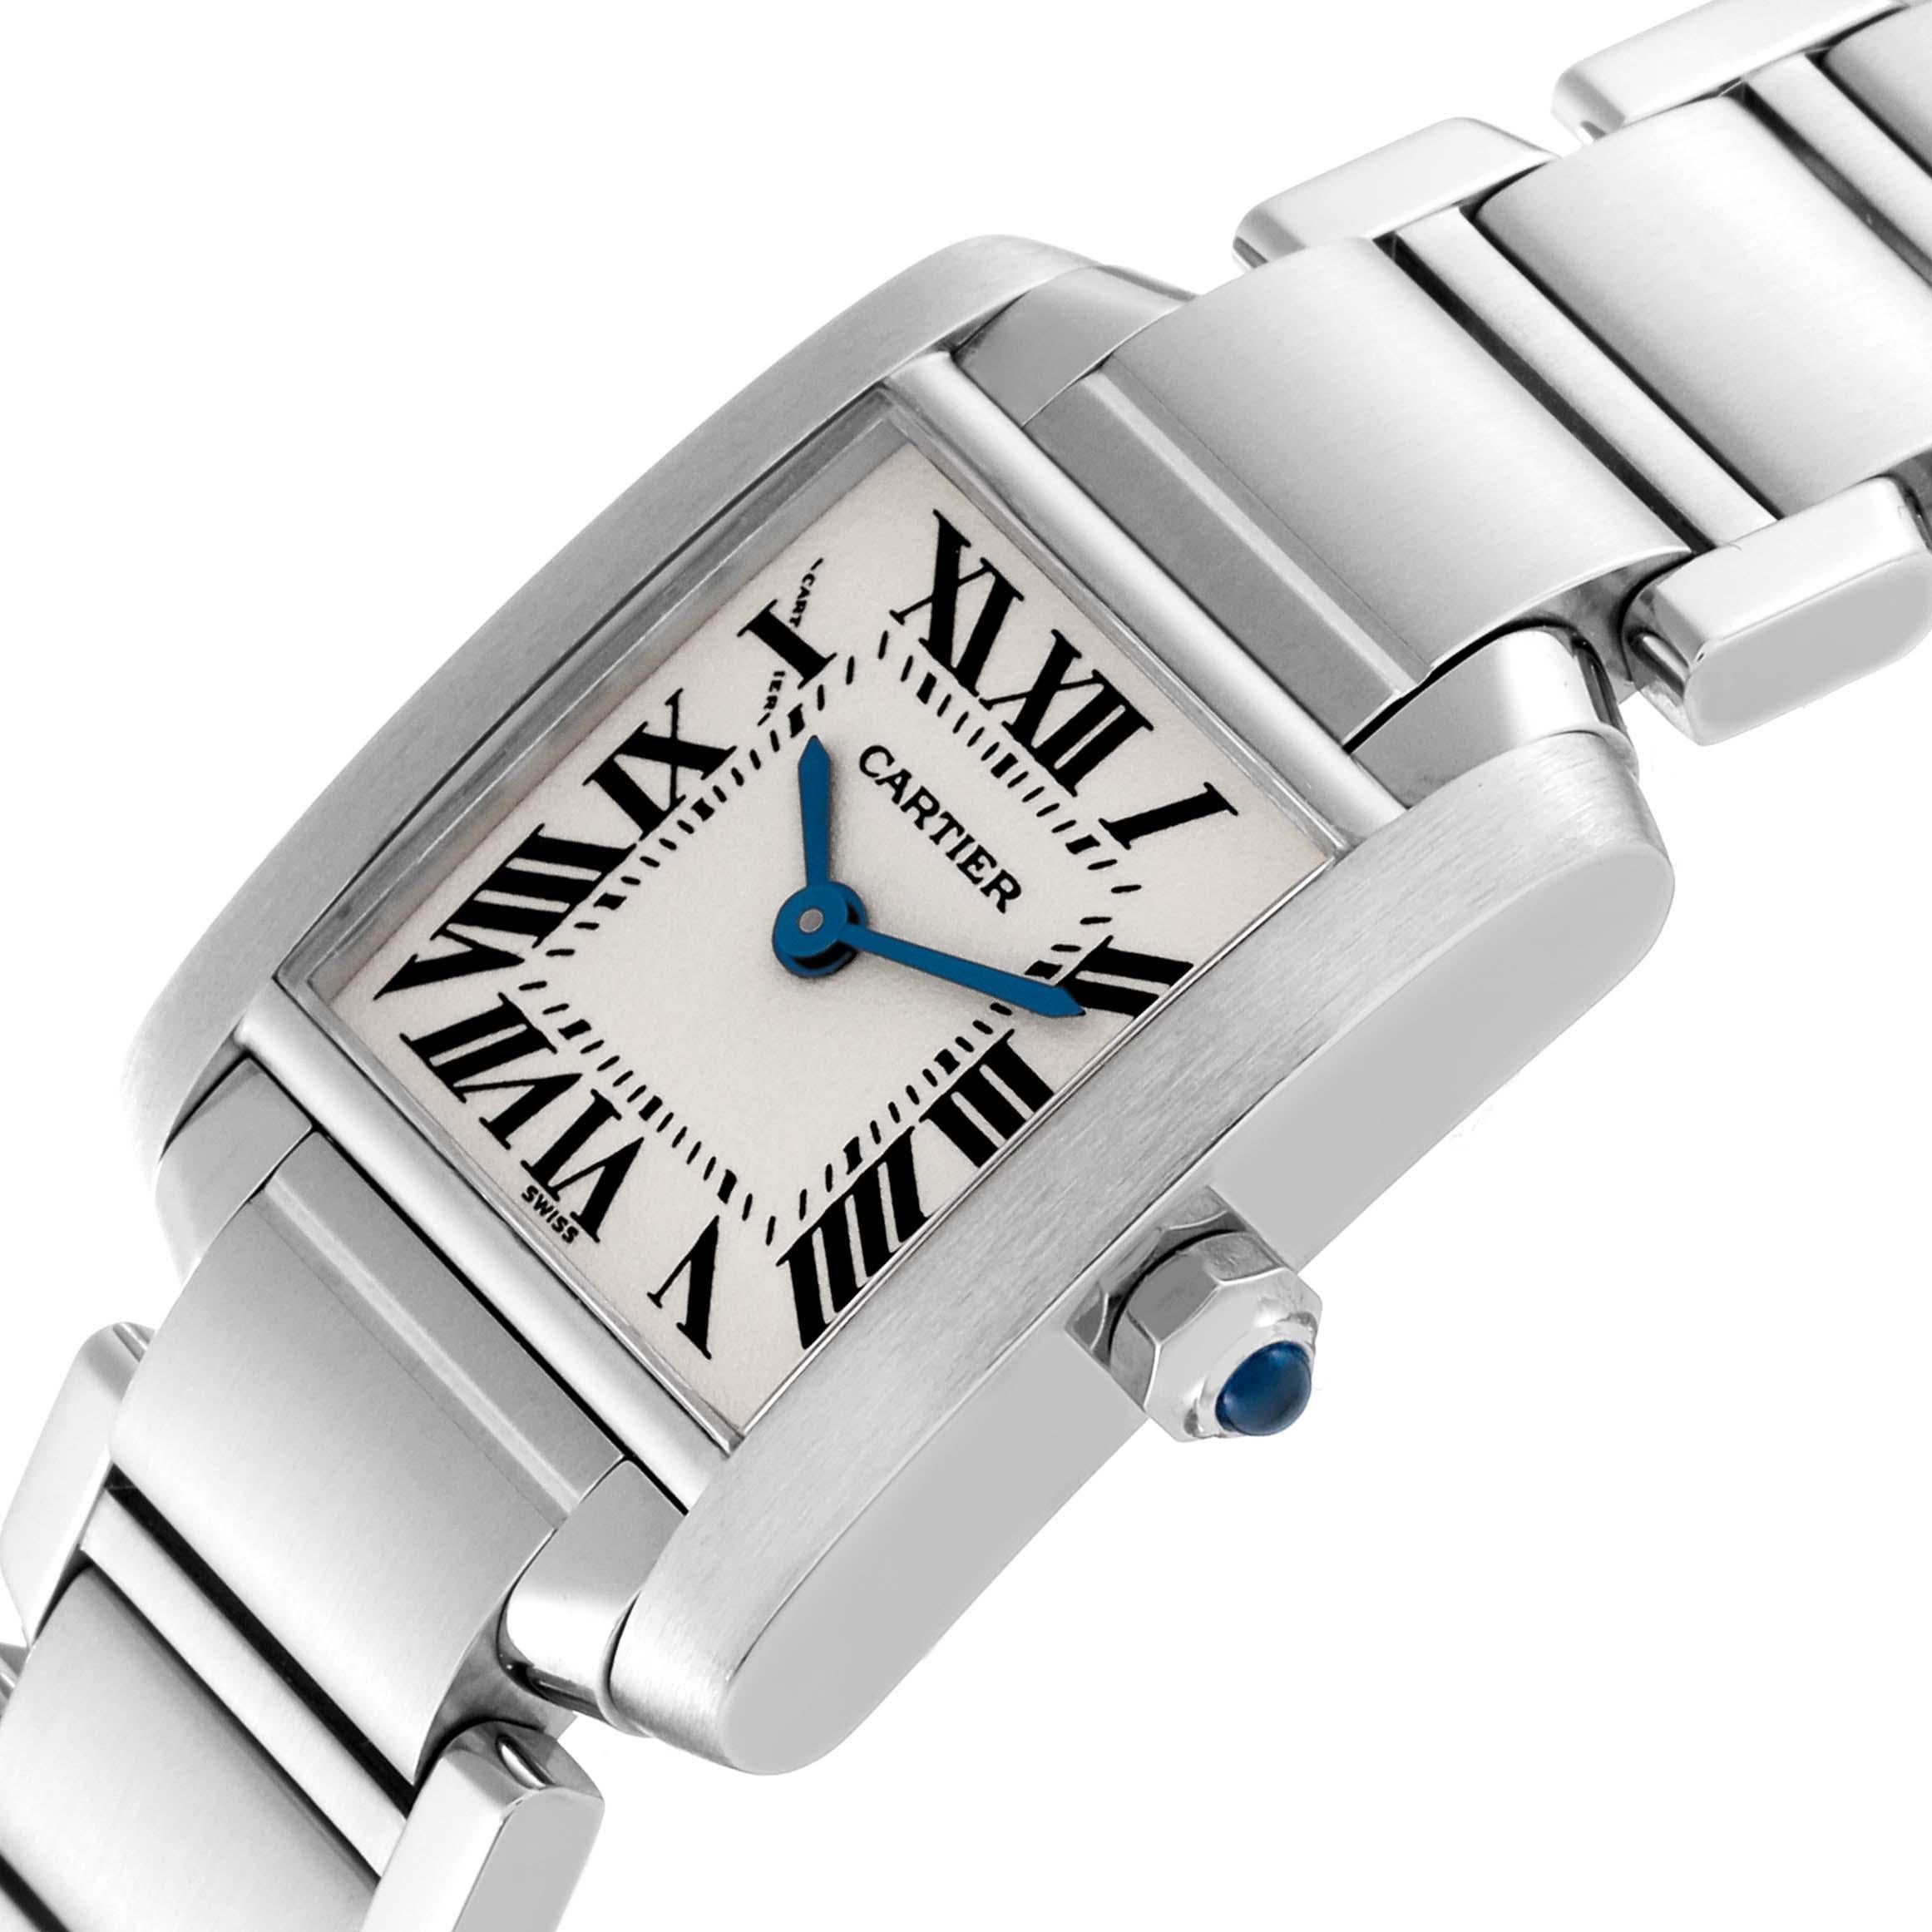 Cartier Tank Francaise Small Silver Dial Steel Ladies Watch W51008Q3 Box Papers Pour femmes en vente